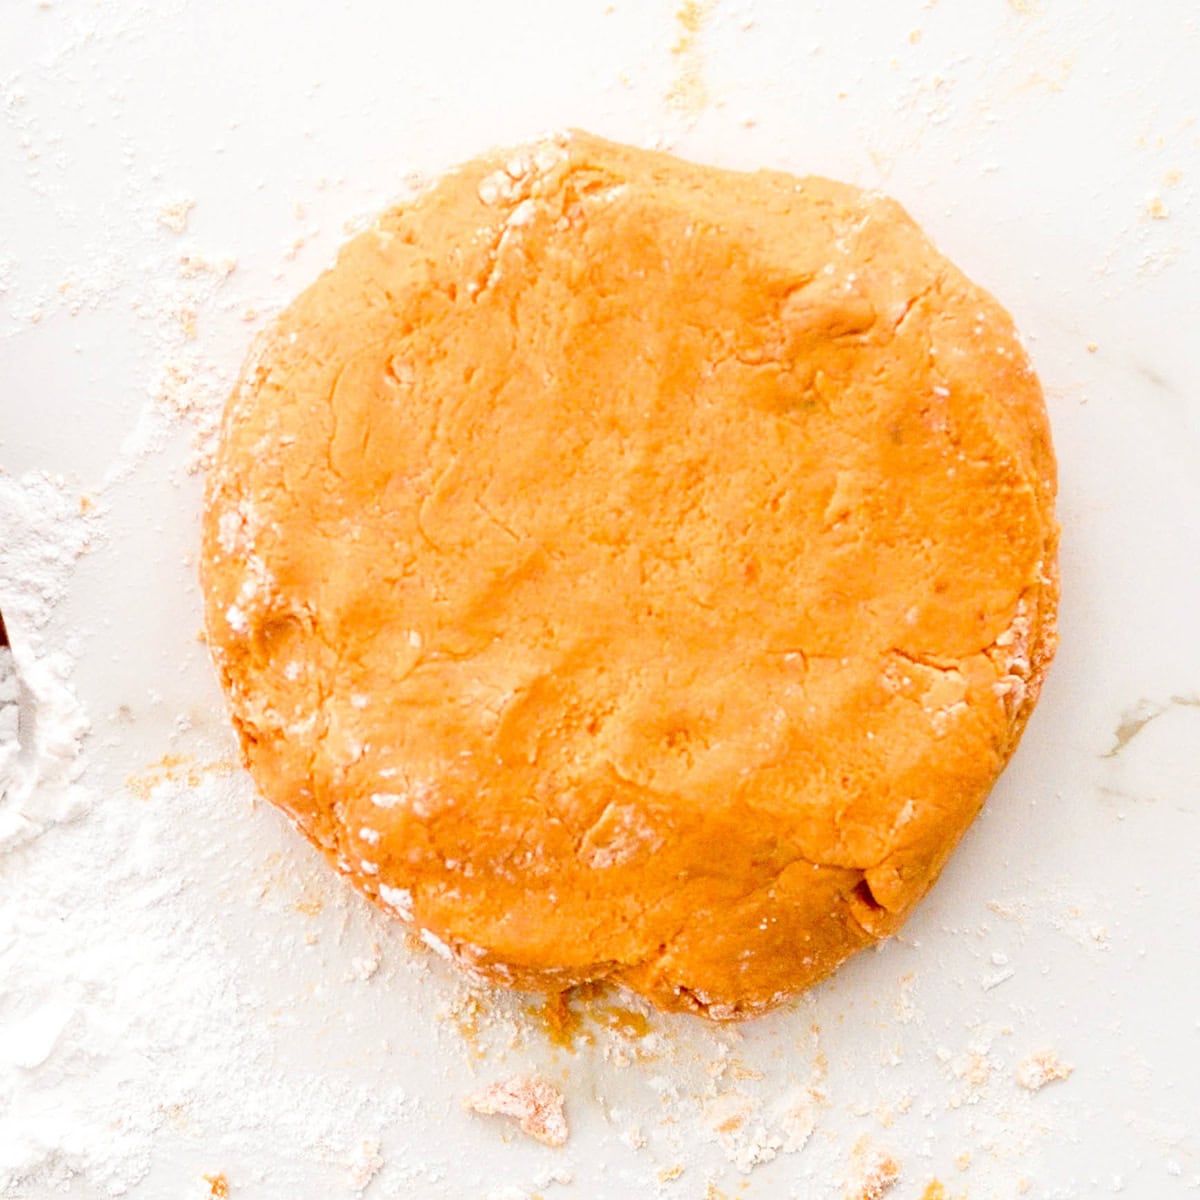 Paleo Sweet Potato Gnocchi dough in a round disc